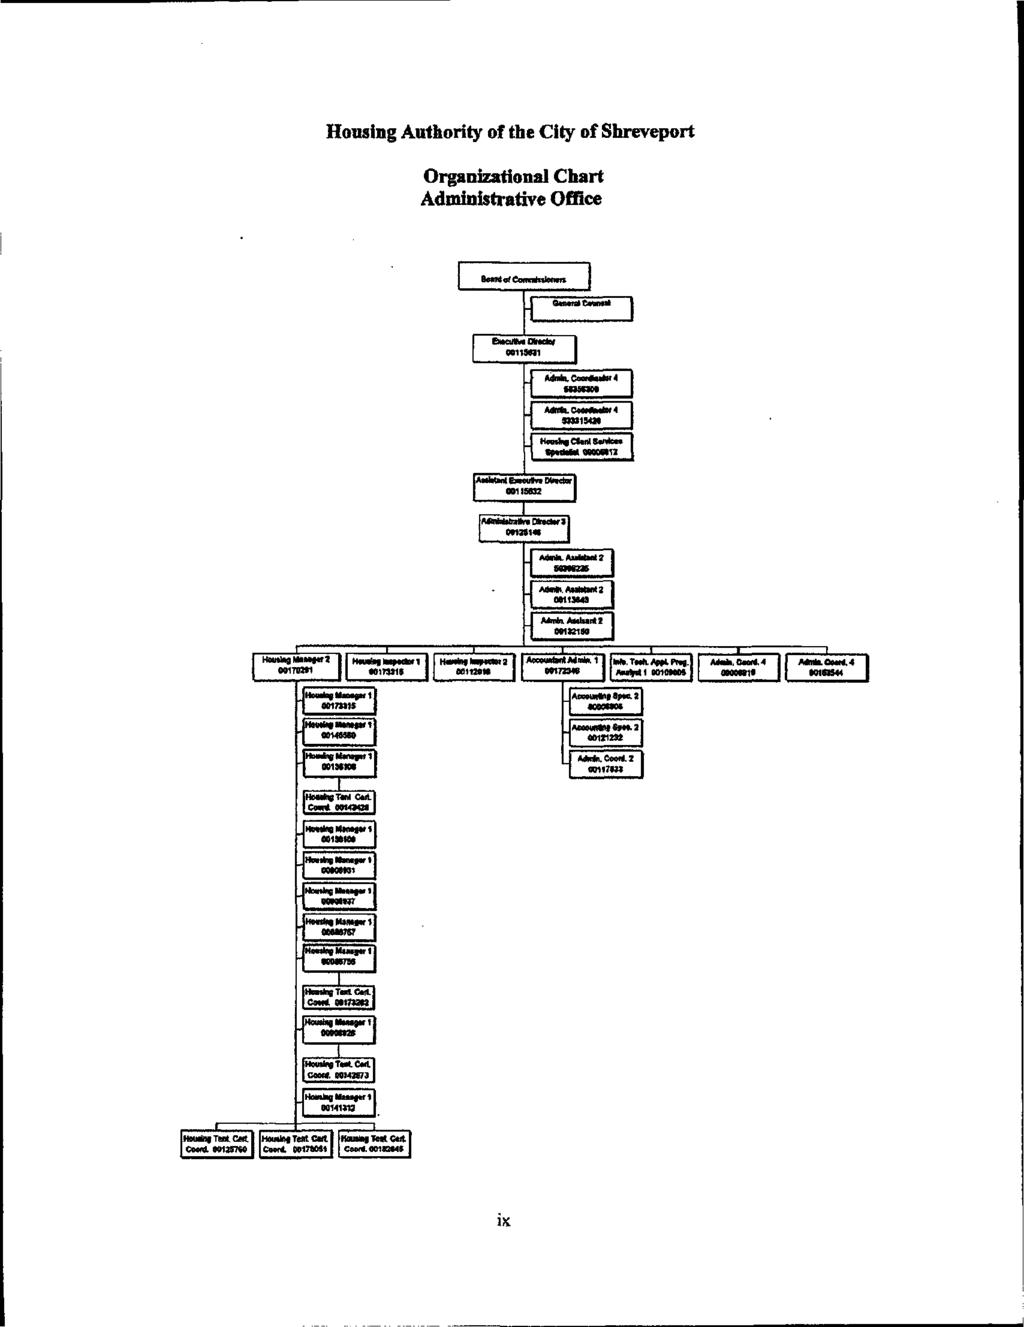 Housing Authority of the City of Shreveport Organizational Chart